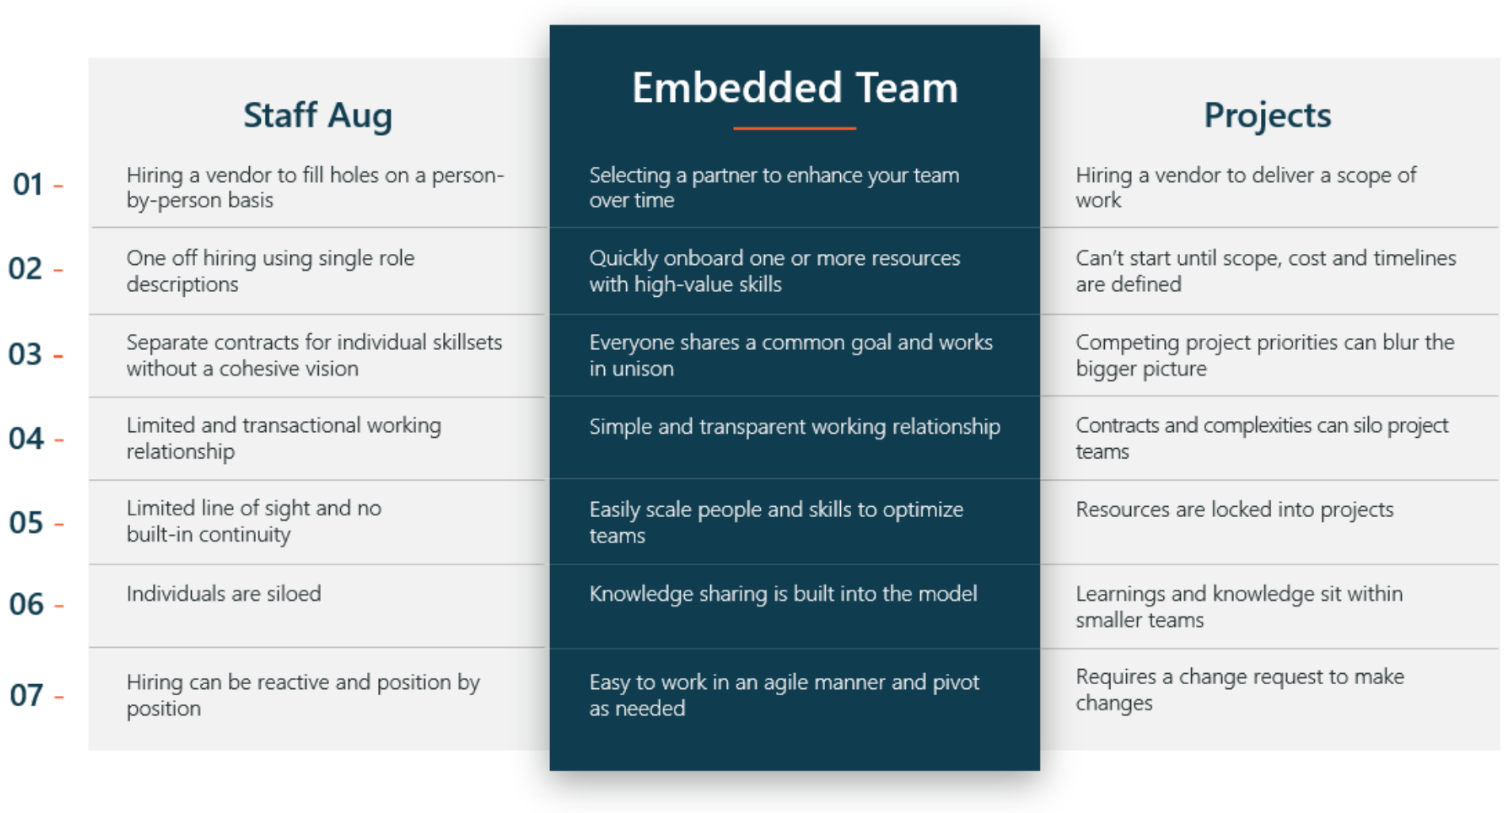 Embedded Team Benefits